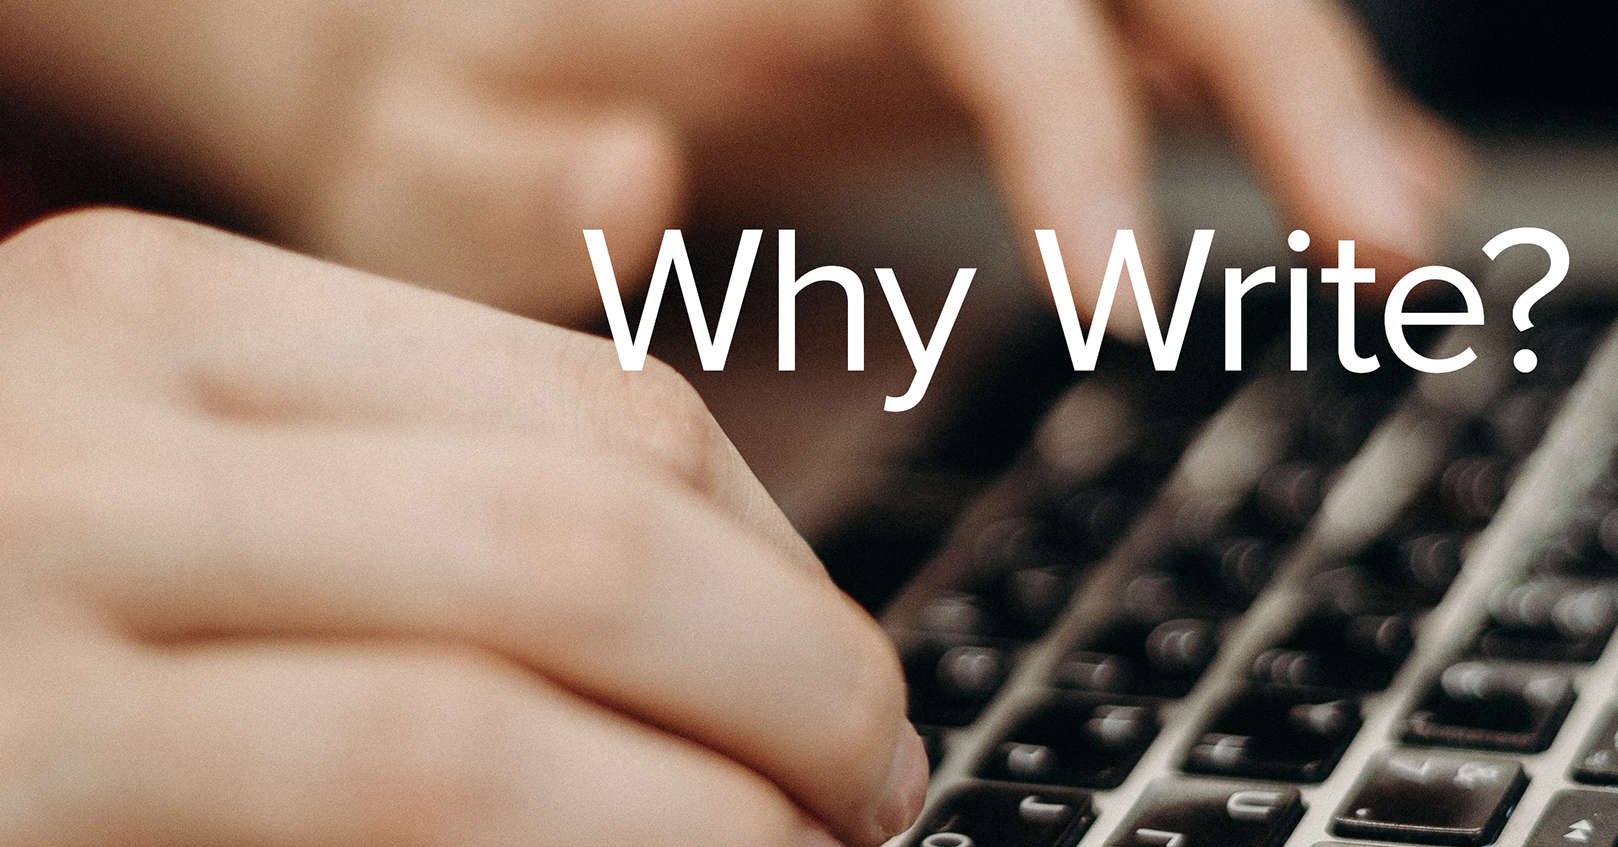 why write